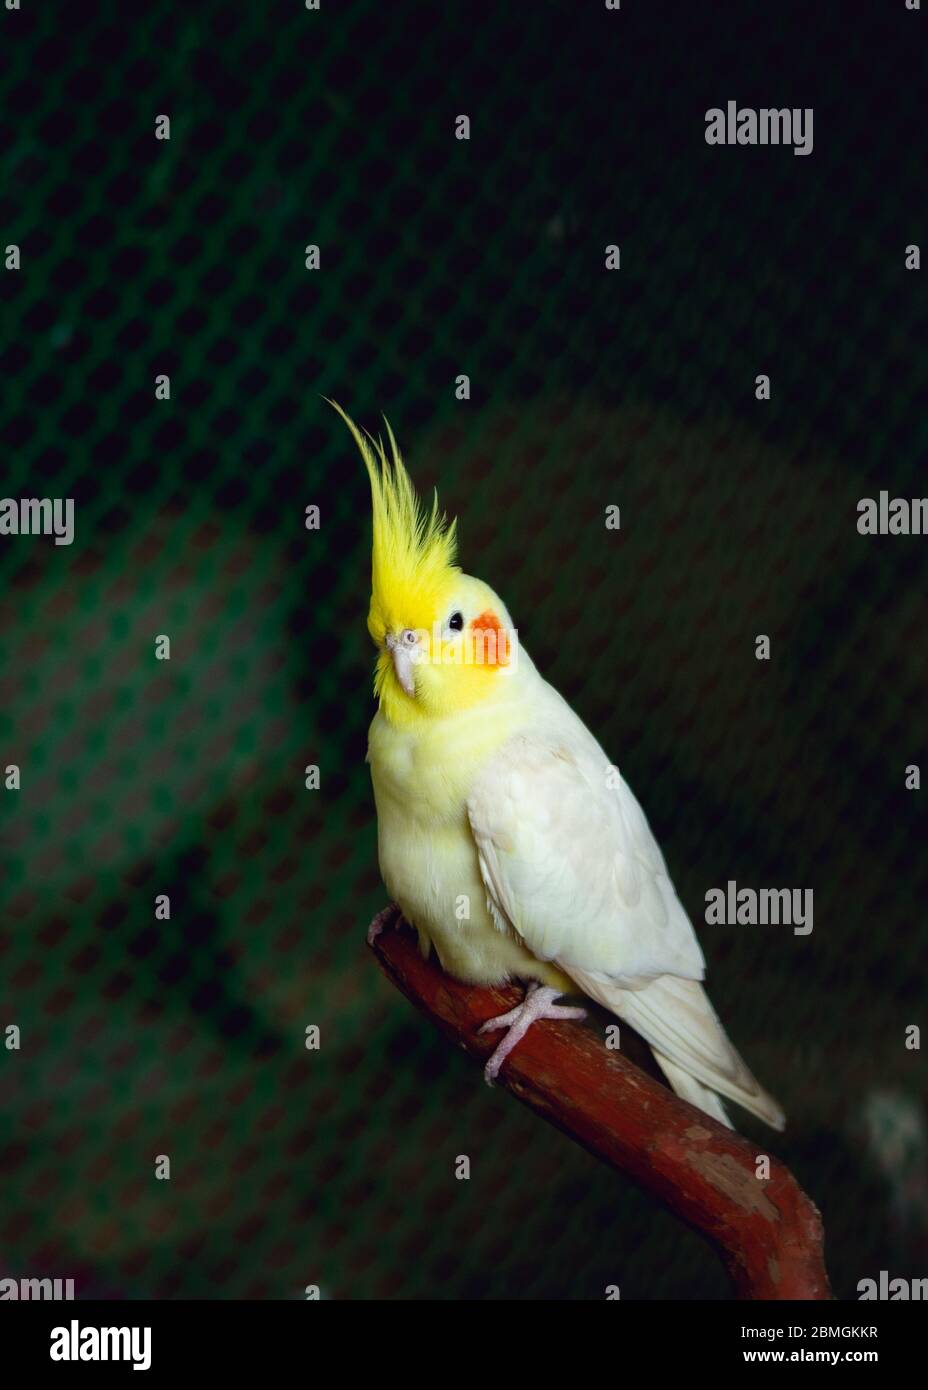 Bronzefallow Cockatiel Bird. Selective focus on Subject. Selective focus on foreground. Background blur Stock Photo